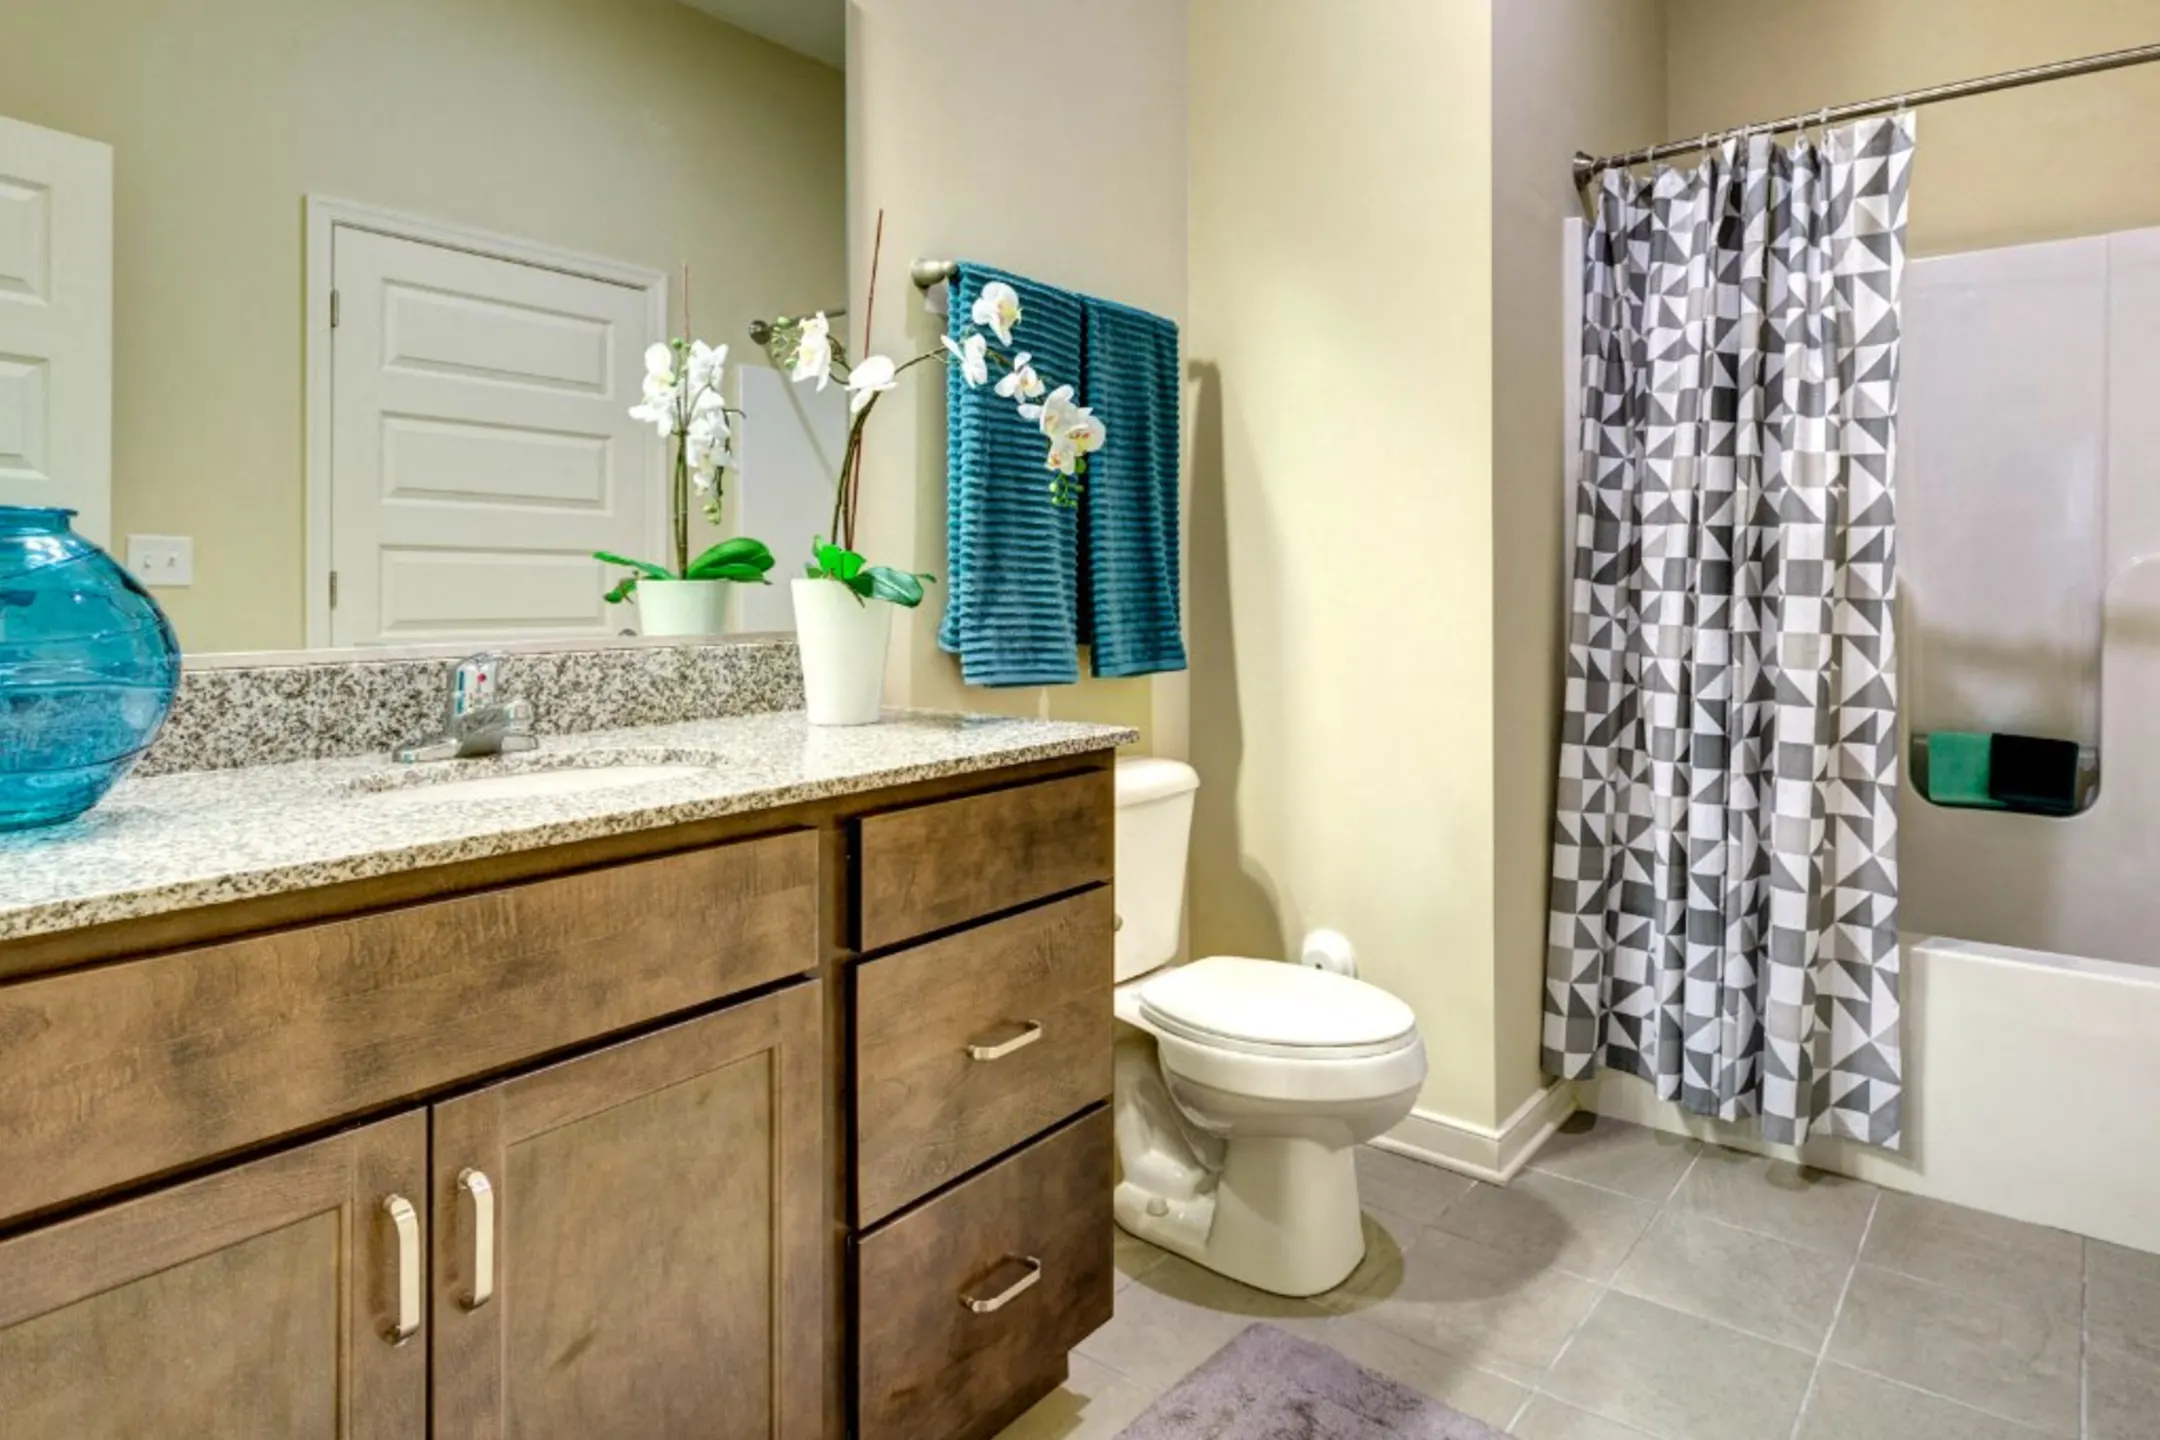 Bathroom - Venture Apartments iN Tech Center - Newport News, VA